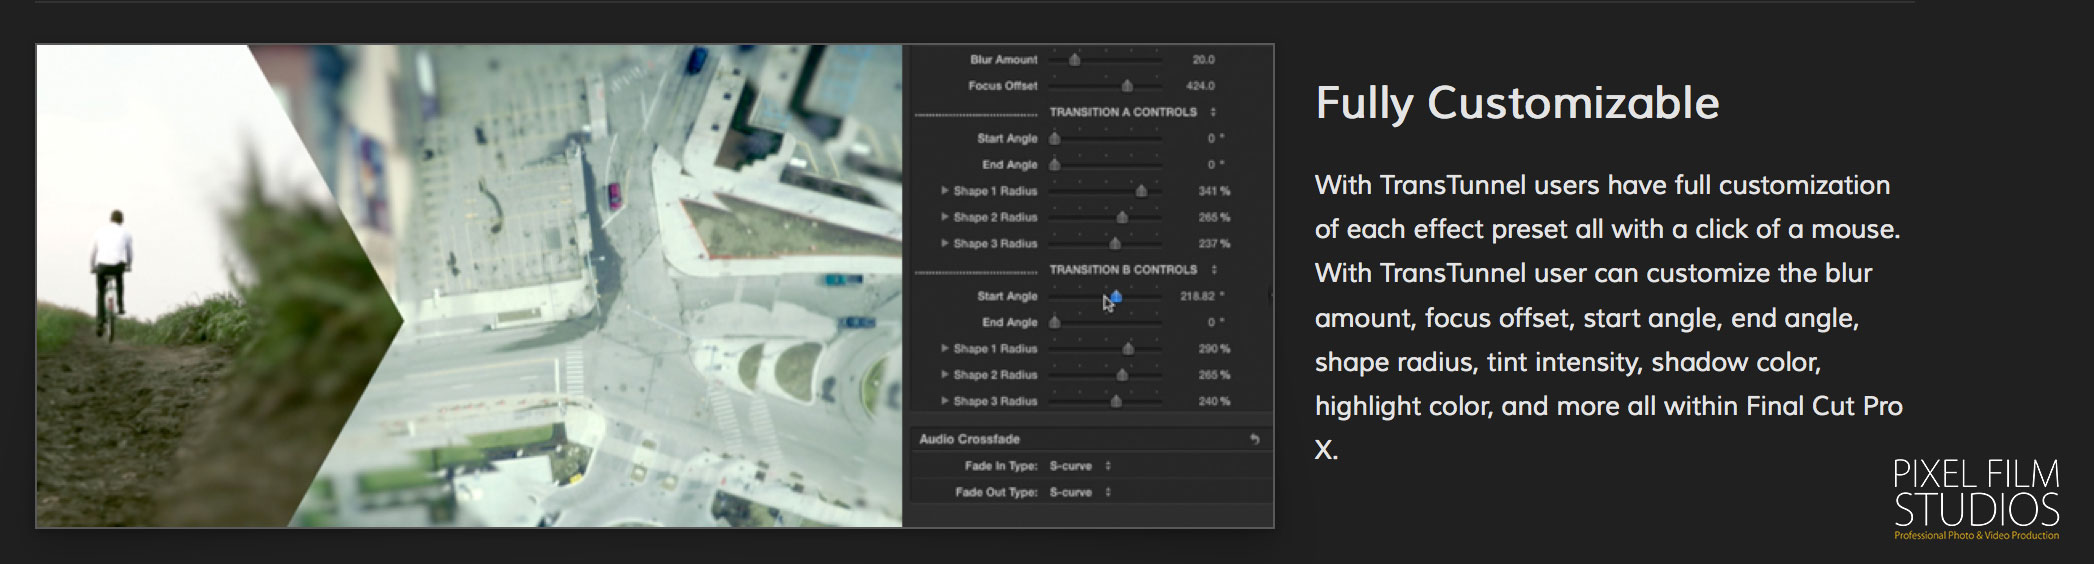 Pixel Film Studios - FCPX Effects - Plugins - Apple